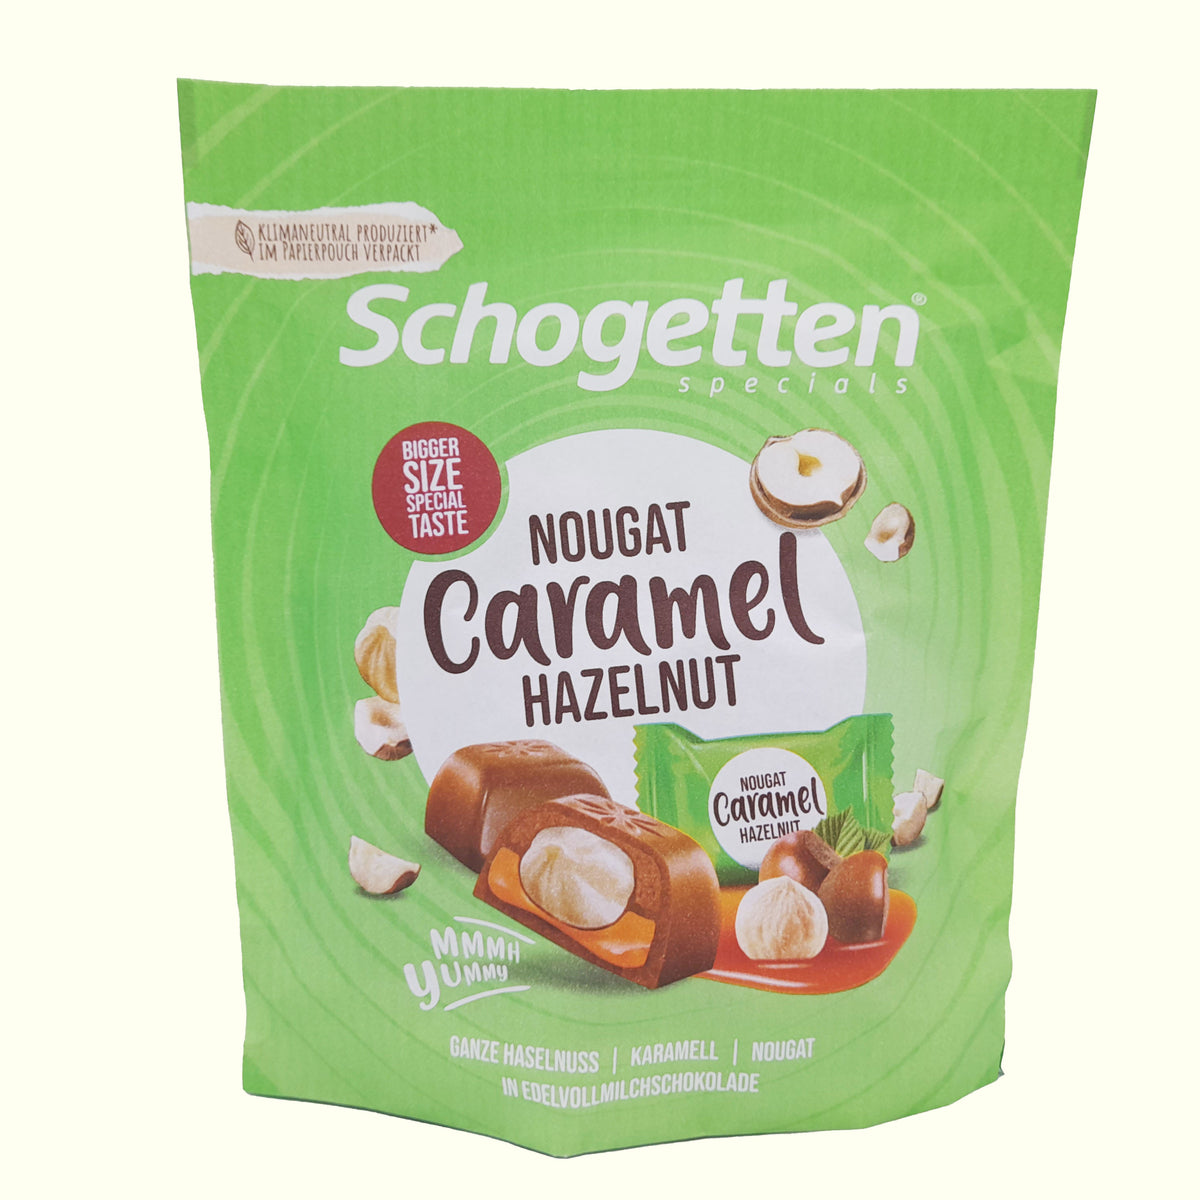 Schogetten Specials Nougat Caramel Hazelnut 125g